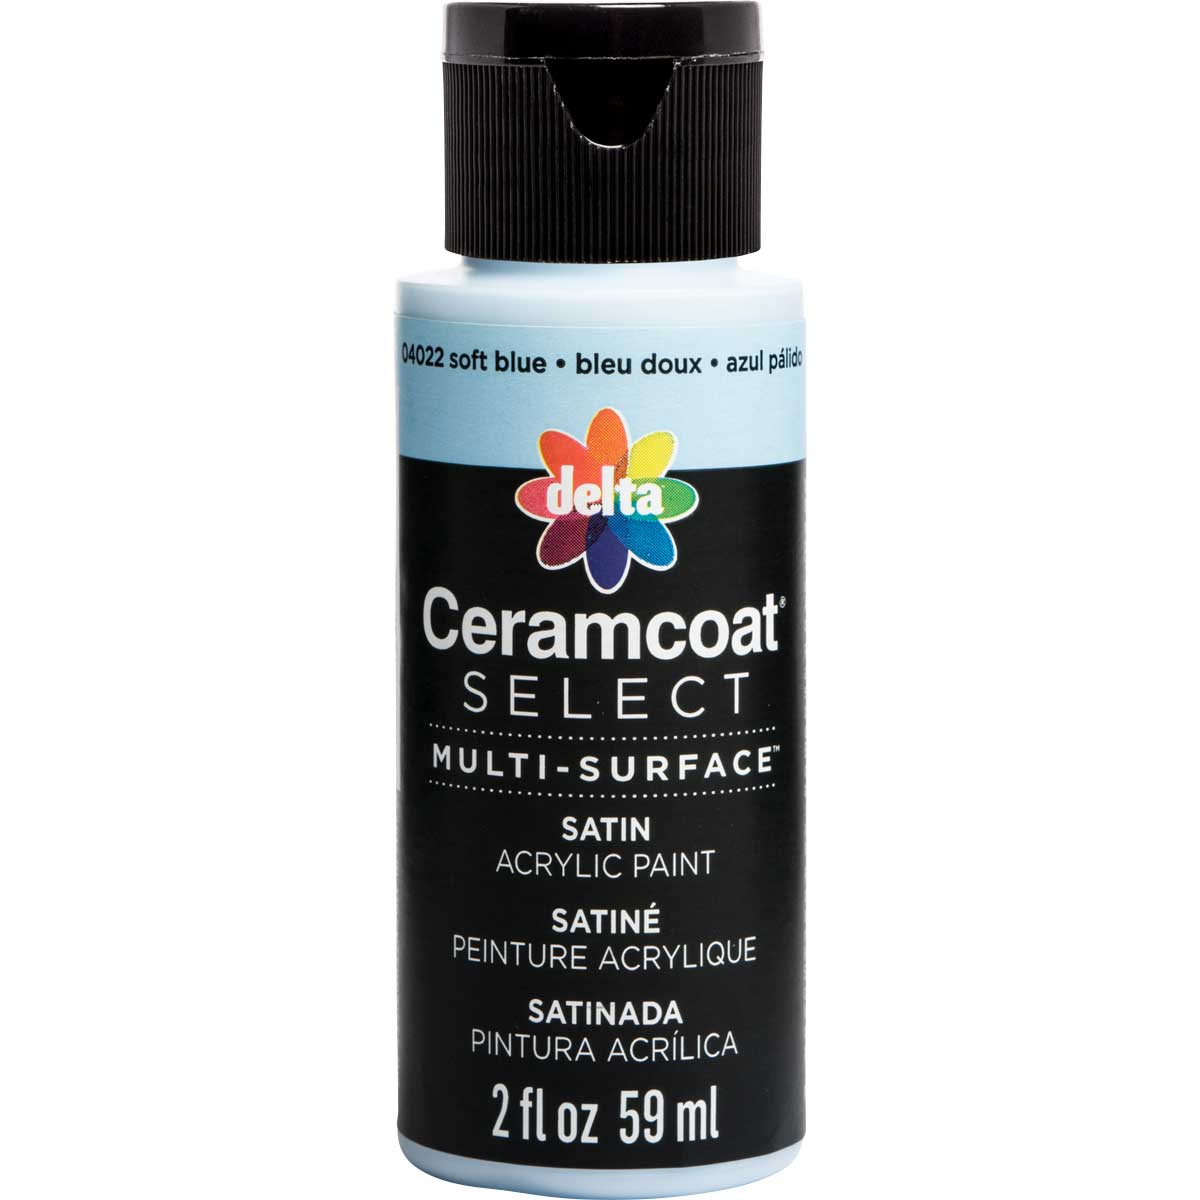 Delta Ceramcoat ® Select Multi-Surface Acrylic Paint - Satin - Soft Blue, 2 oz. - 04022